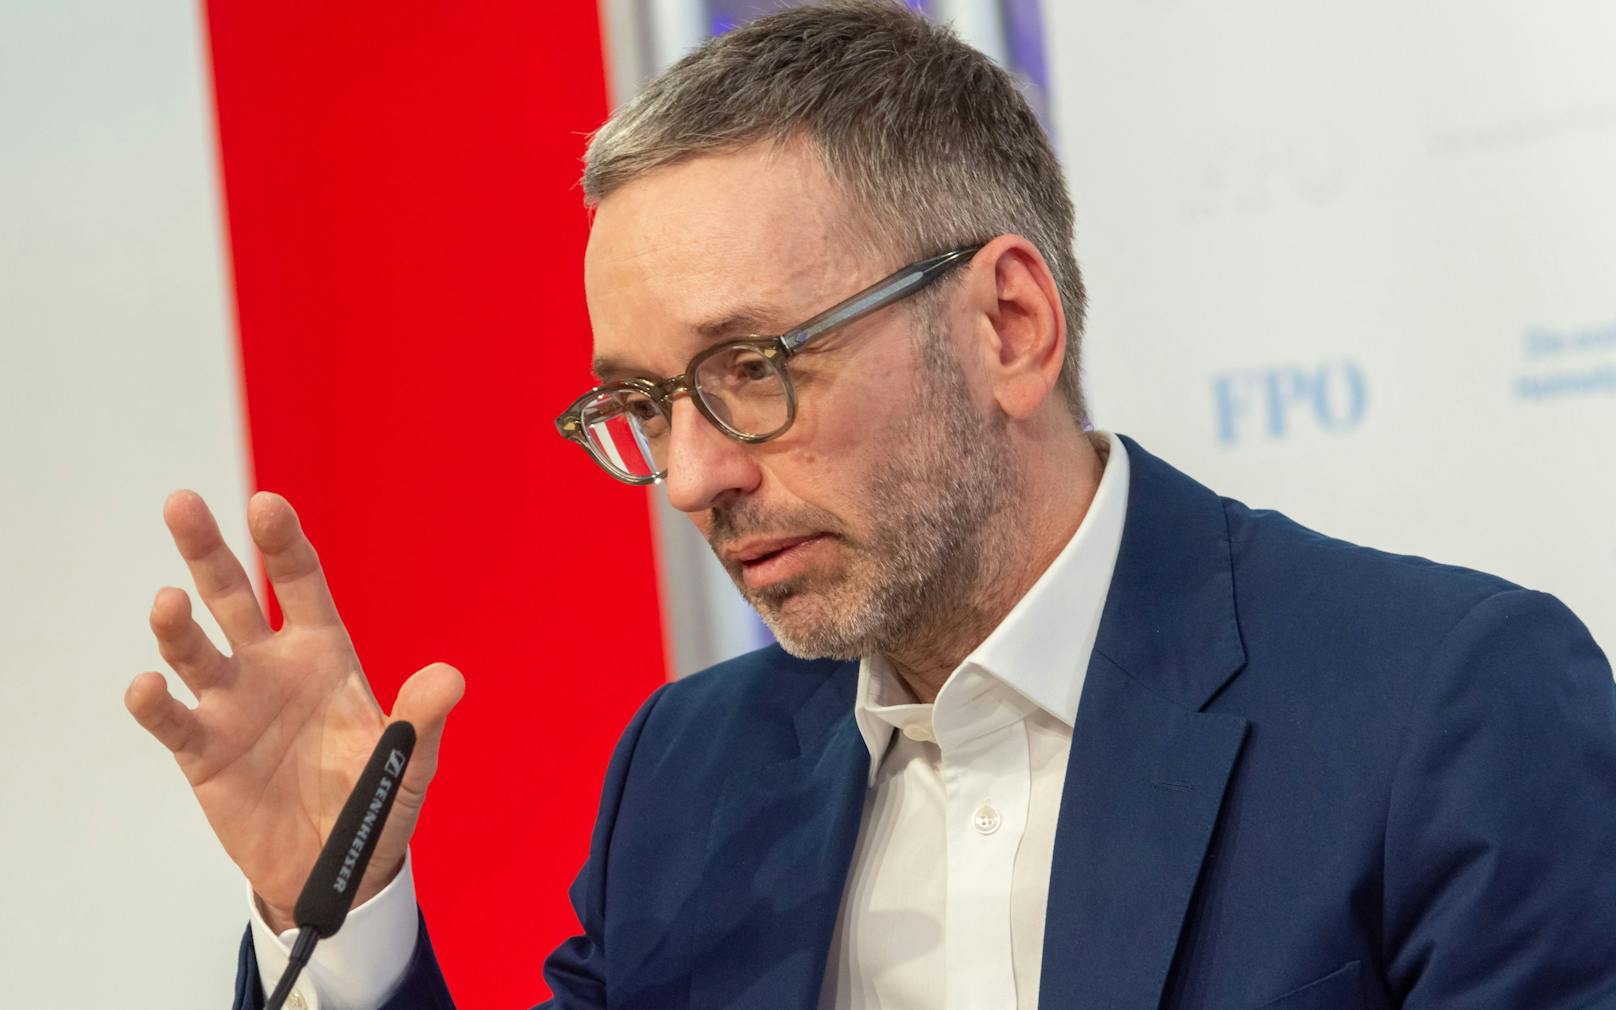 Herbert Kickl weist Russland-Nähe der FPÖ entschieden zurück.